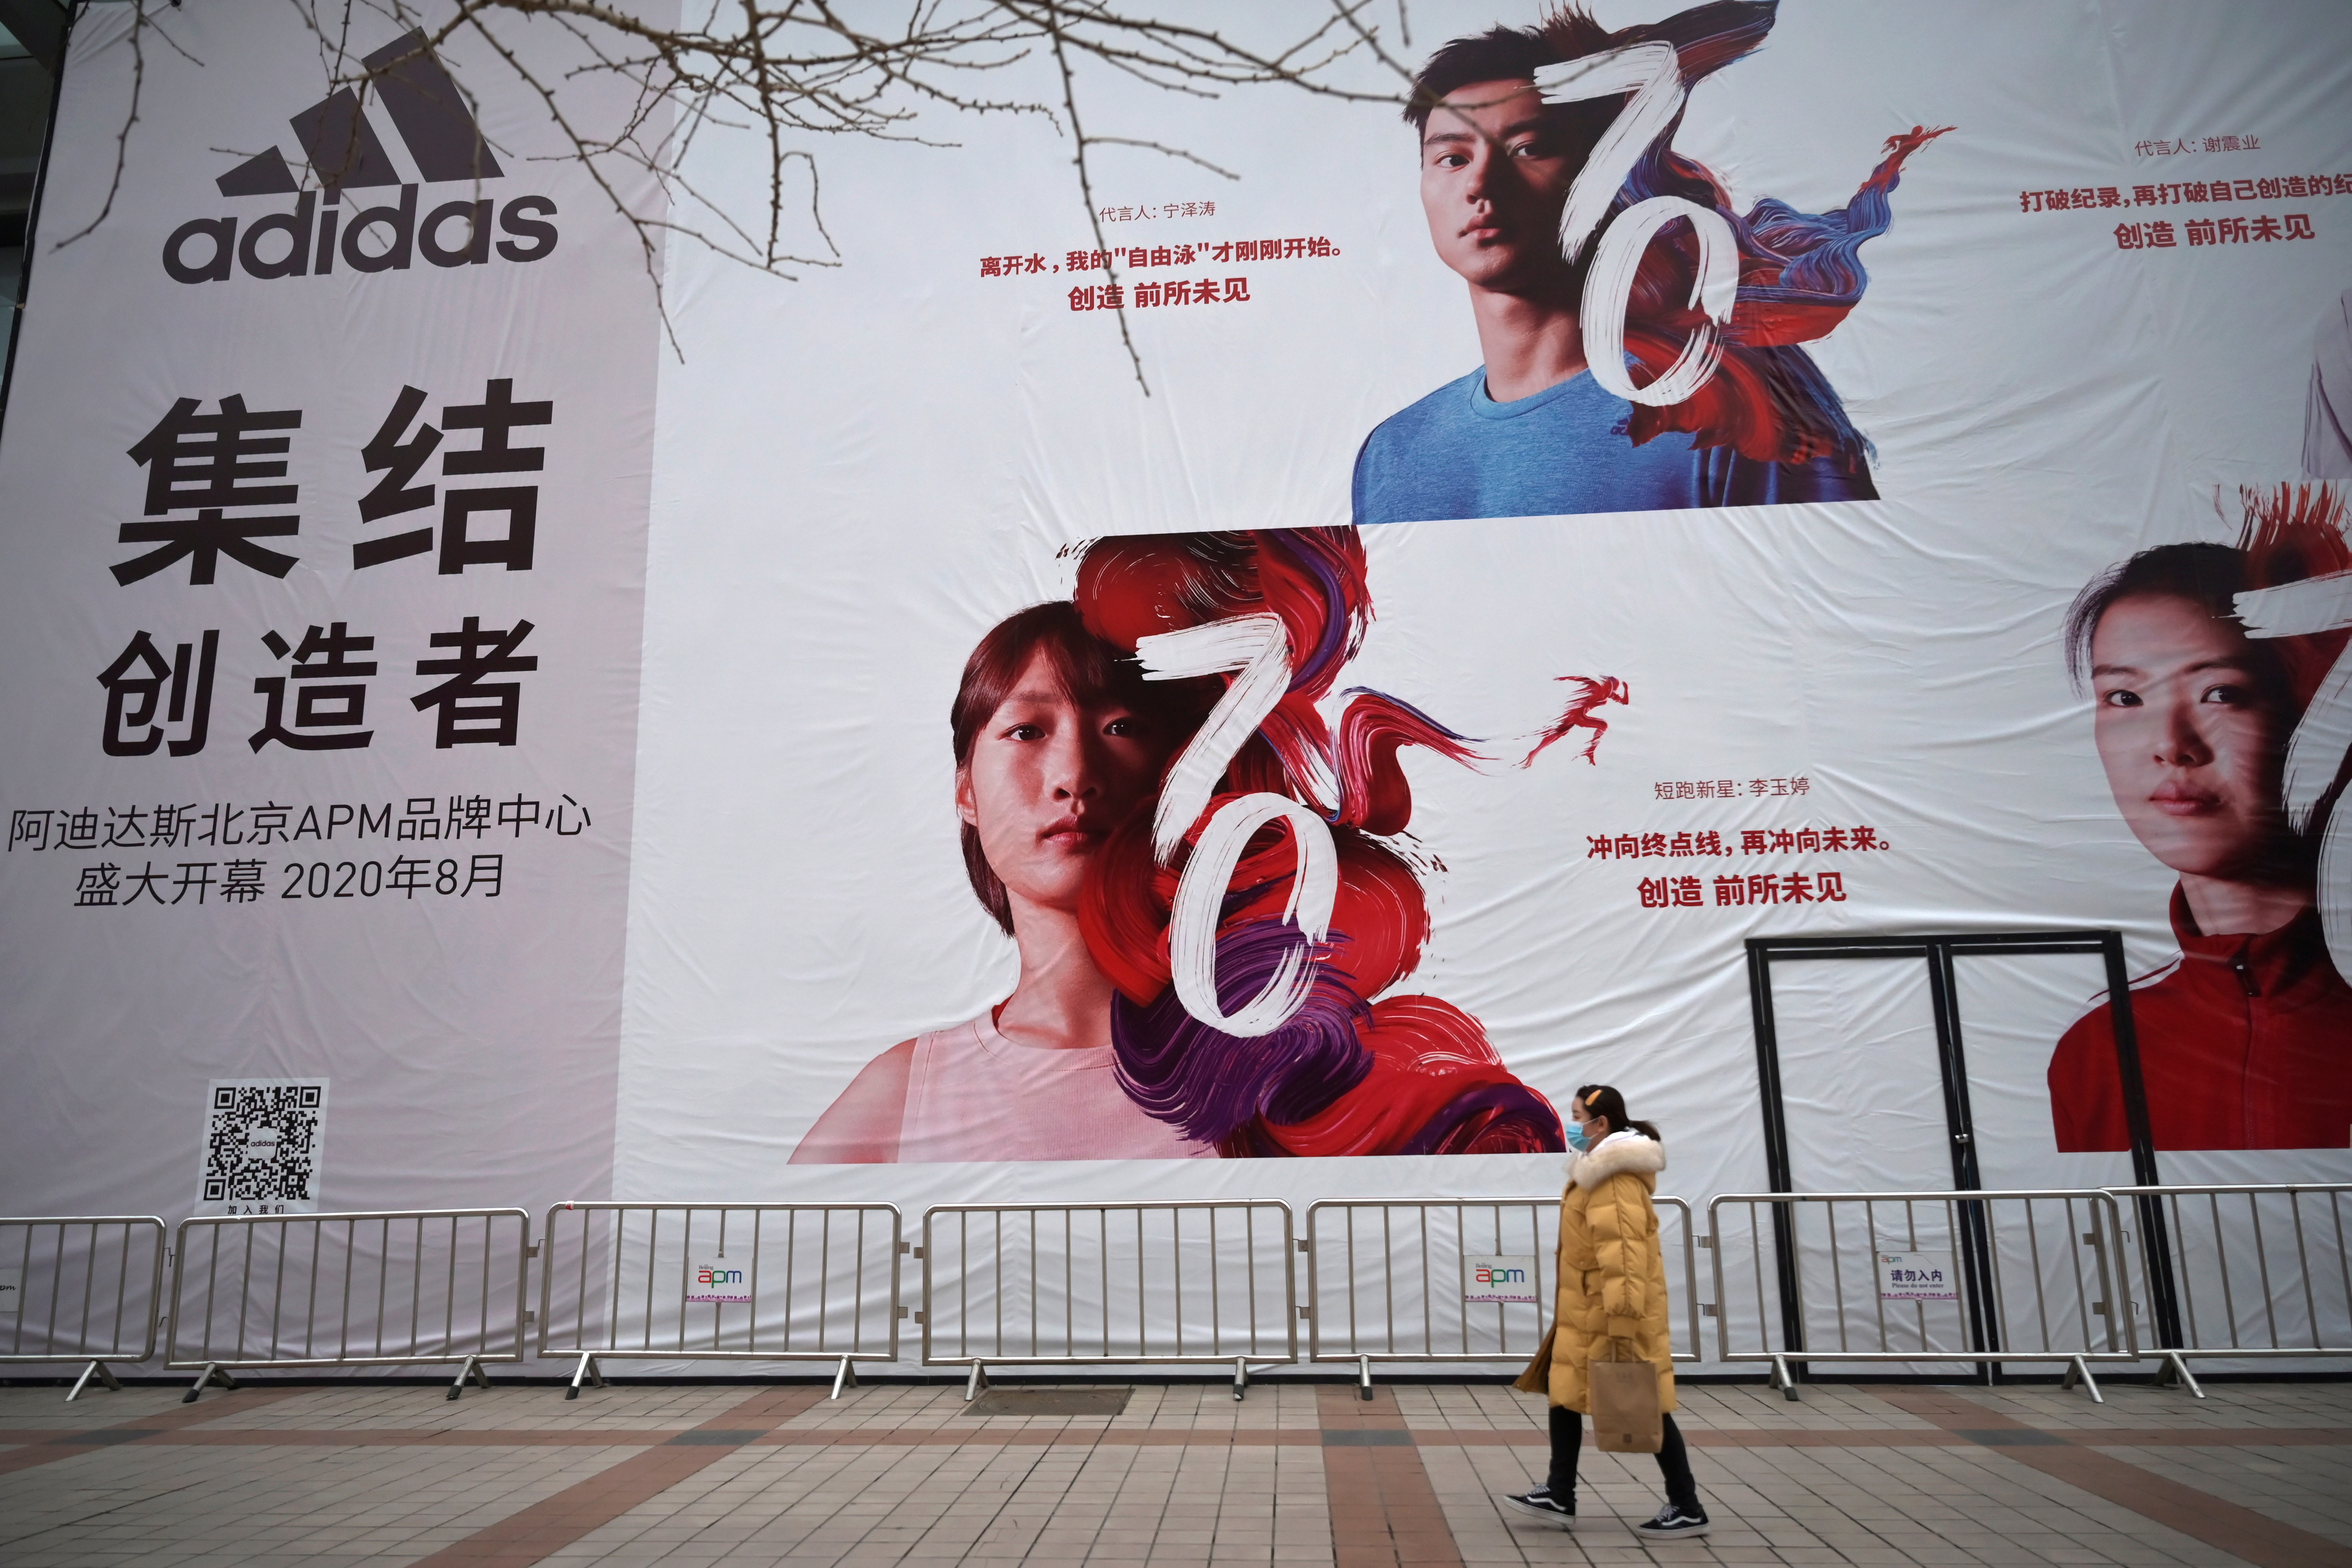 Histérico traición Anciano Adidas lowers 2022 expectations amid China lockdowns | Reuters